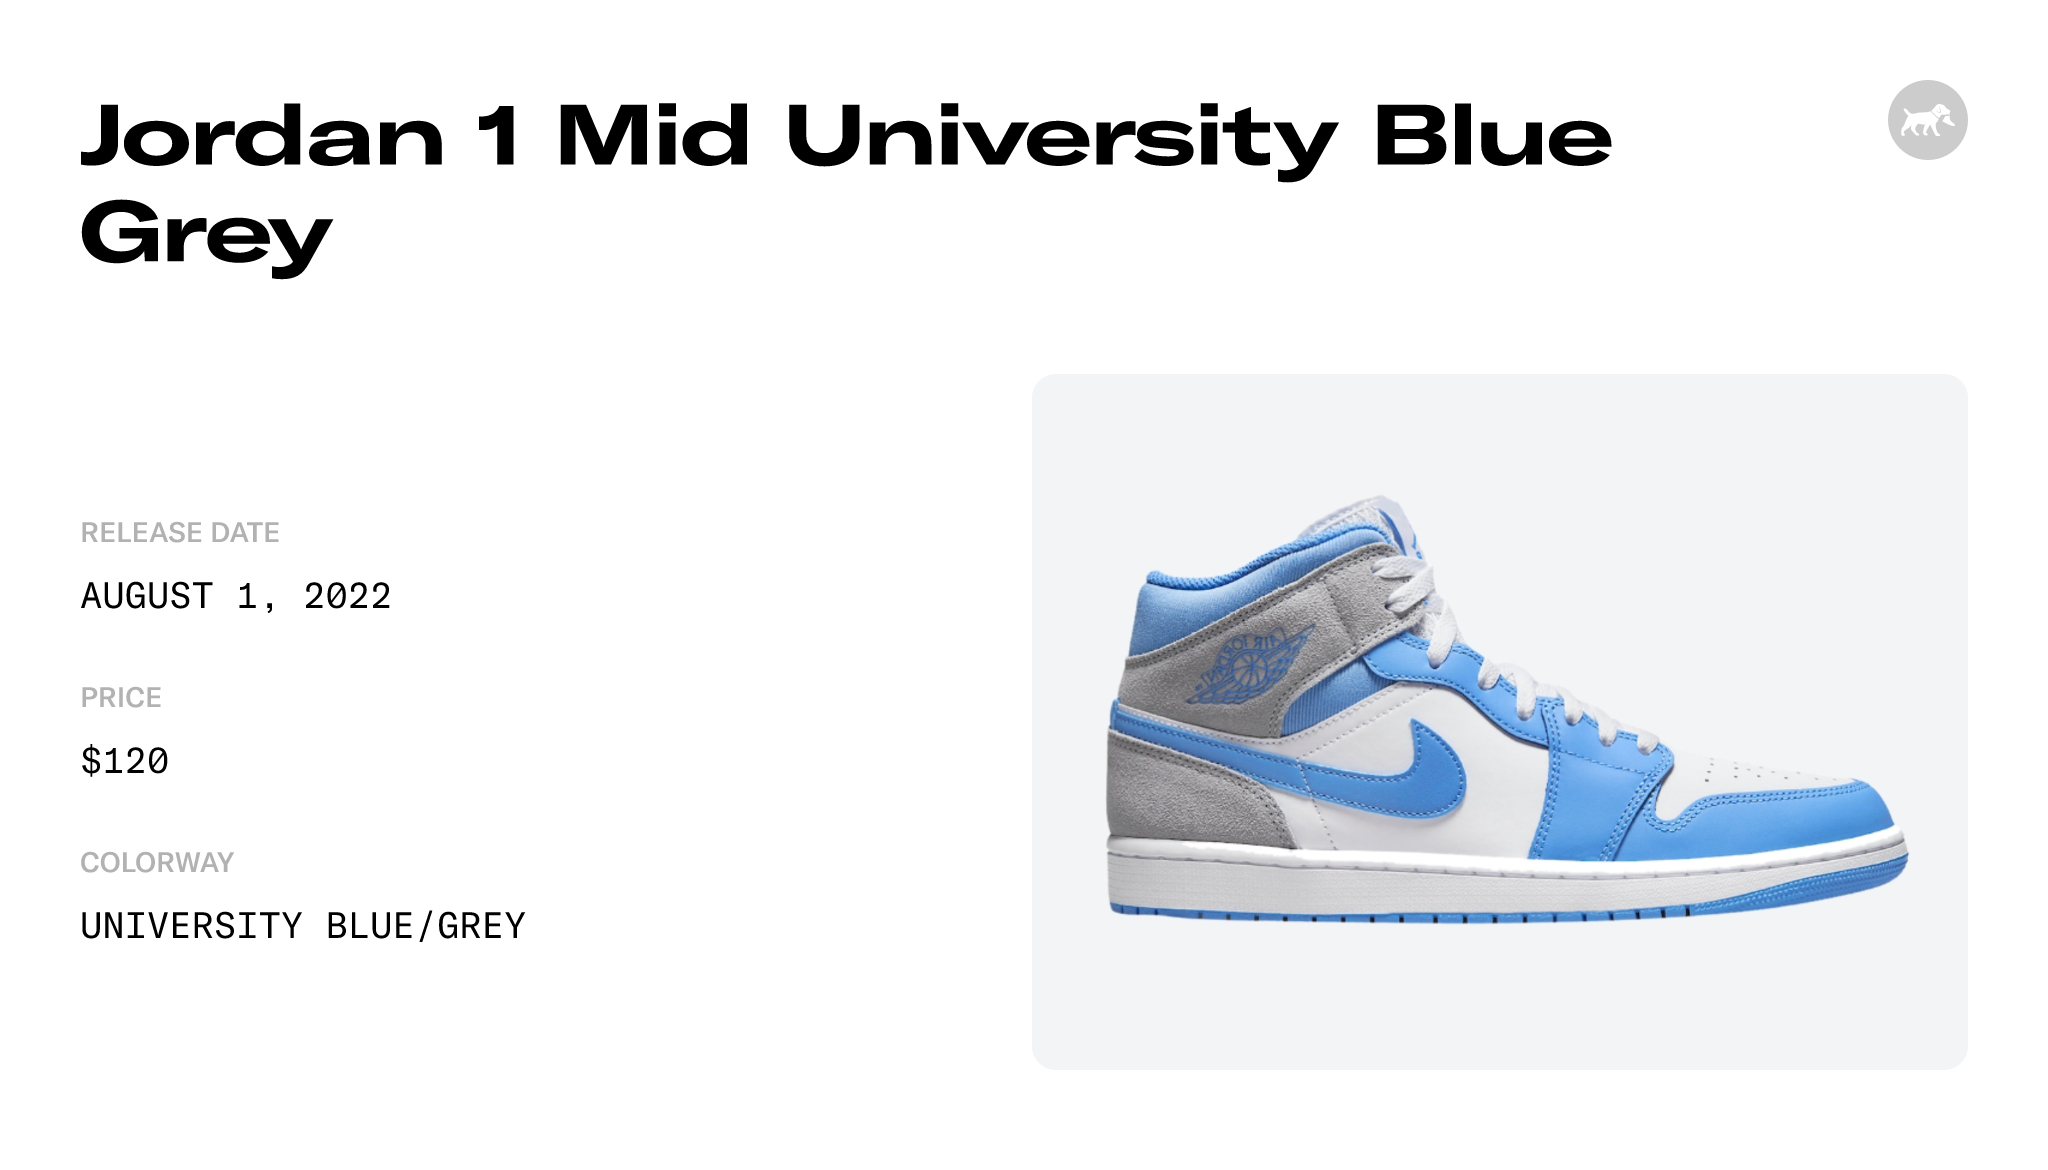 Jordan 1 Mid University Blue Grey - DX9276-100 Raffles and Release Date